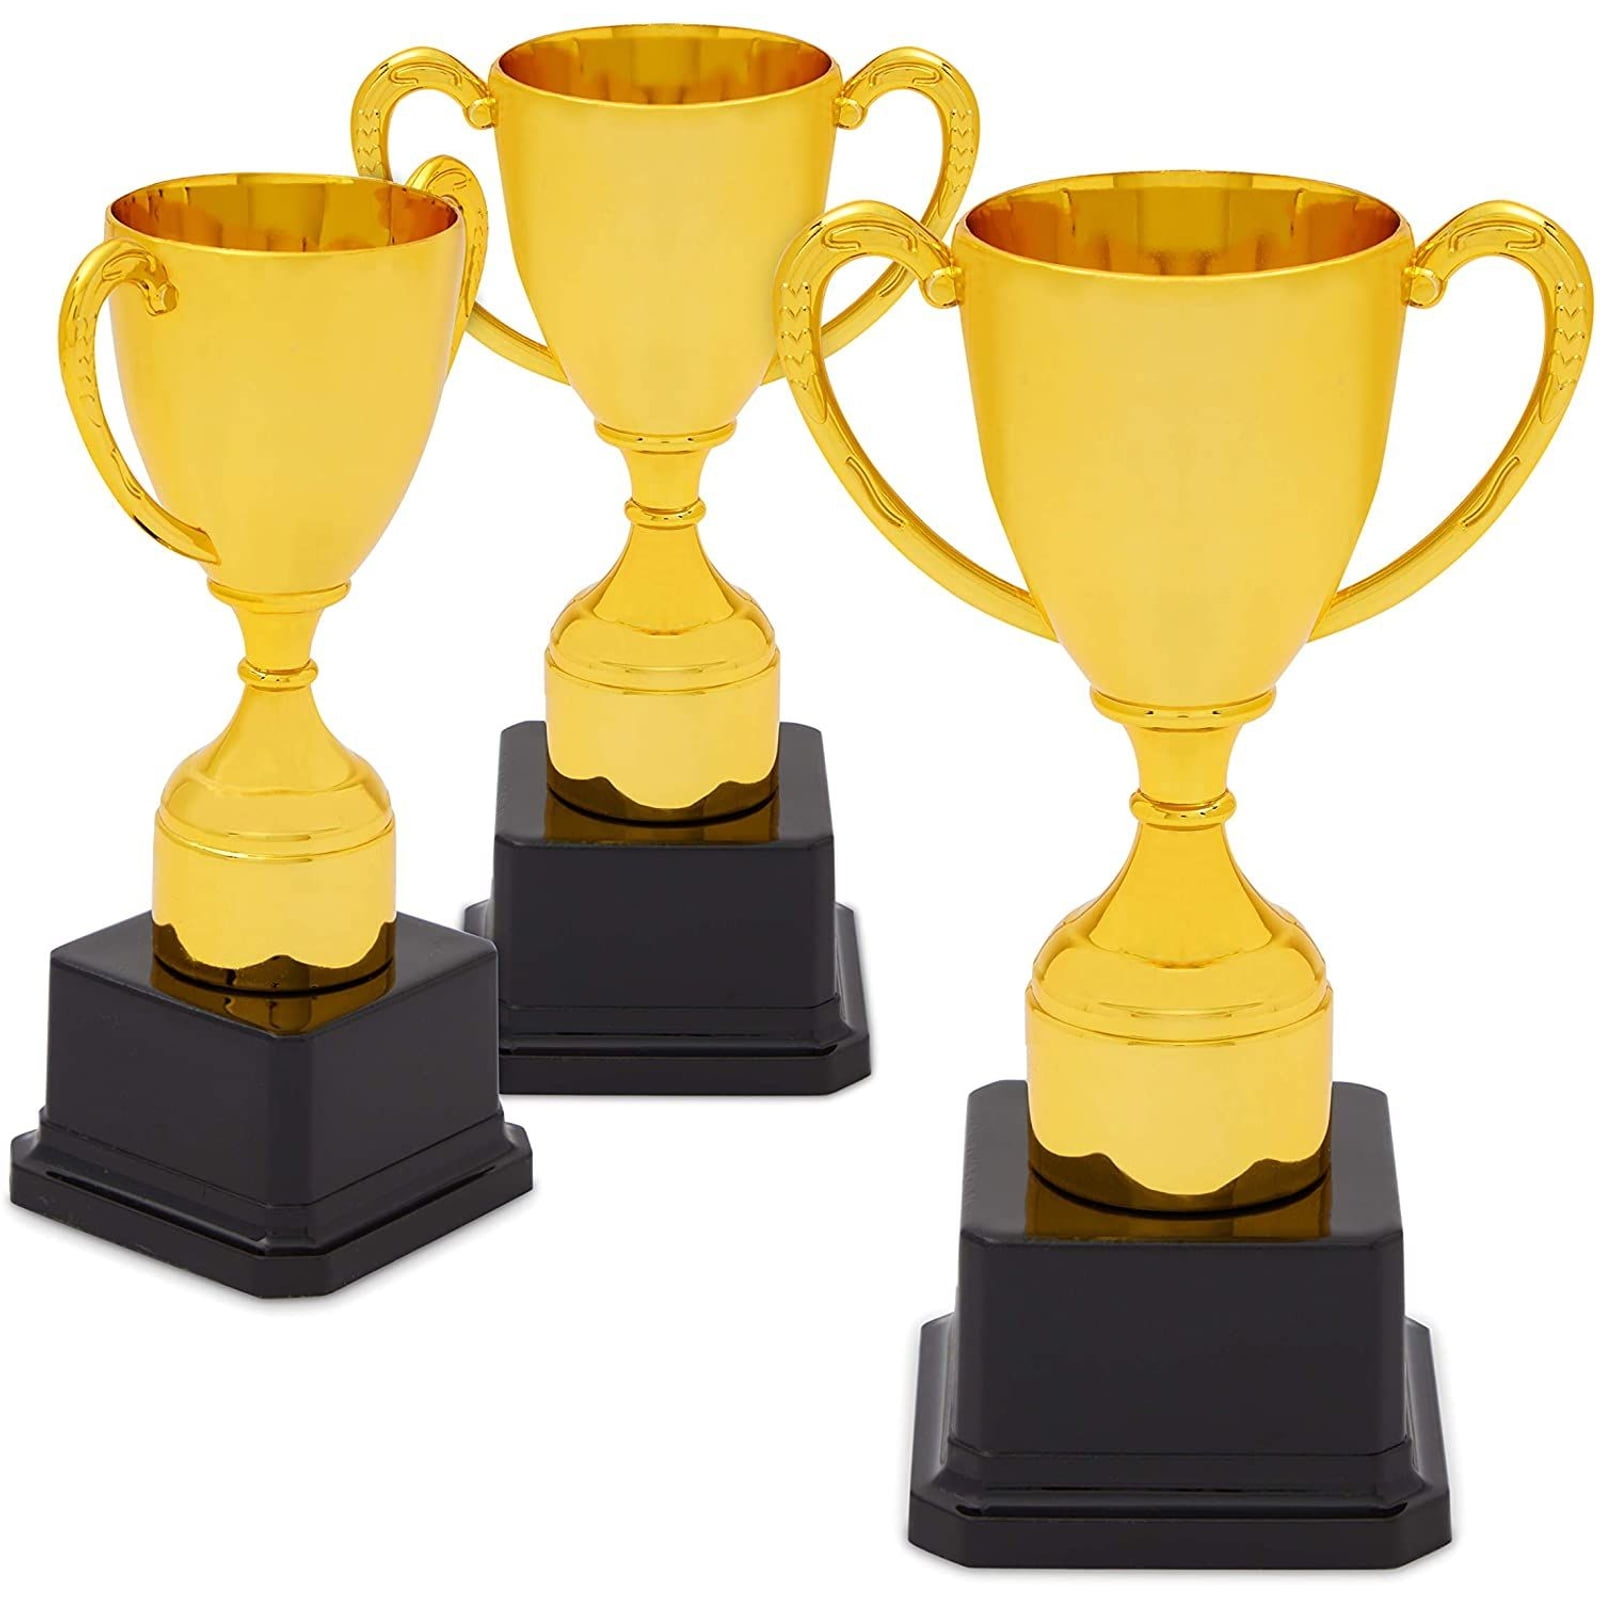 12 Super Star Award Medals Party Bag Fillers & Game PrizesKids Party Games 